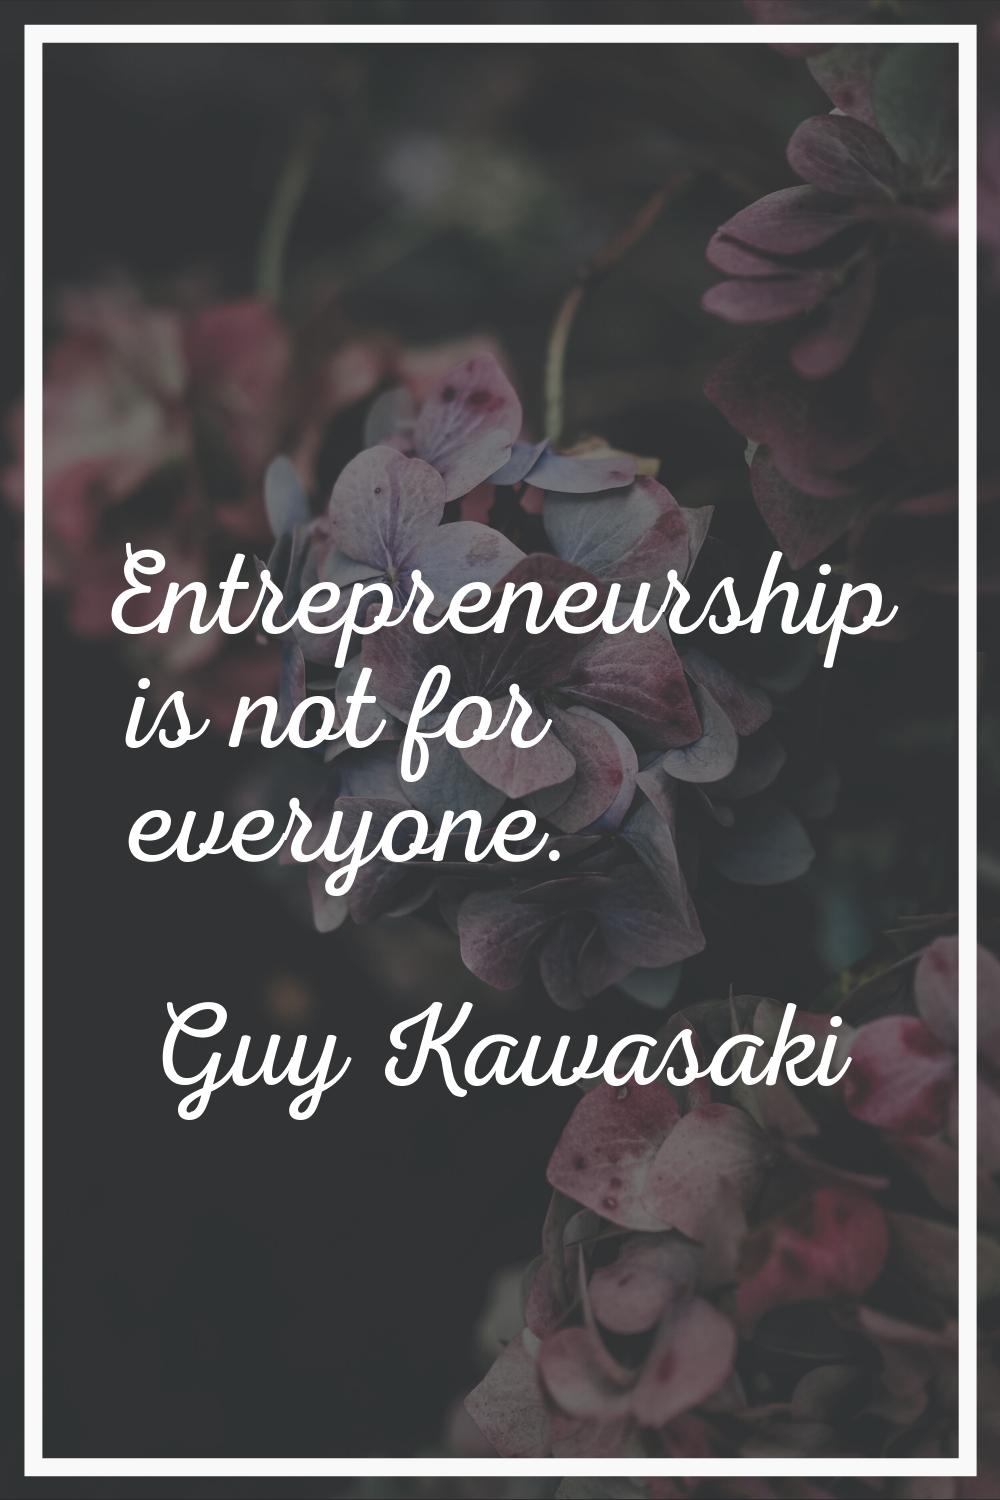 Entrepreneurship is not for everyone.